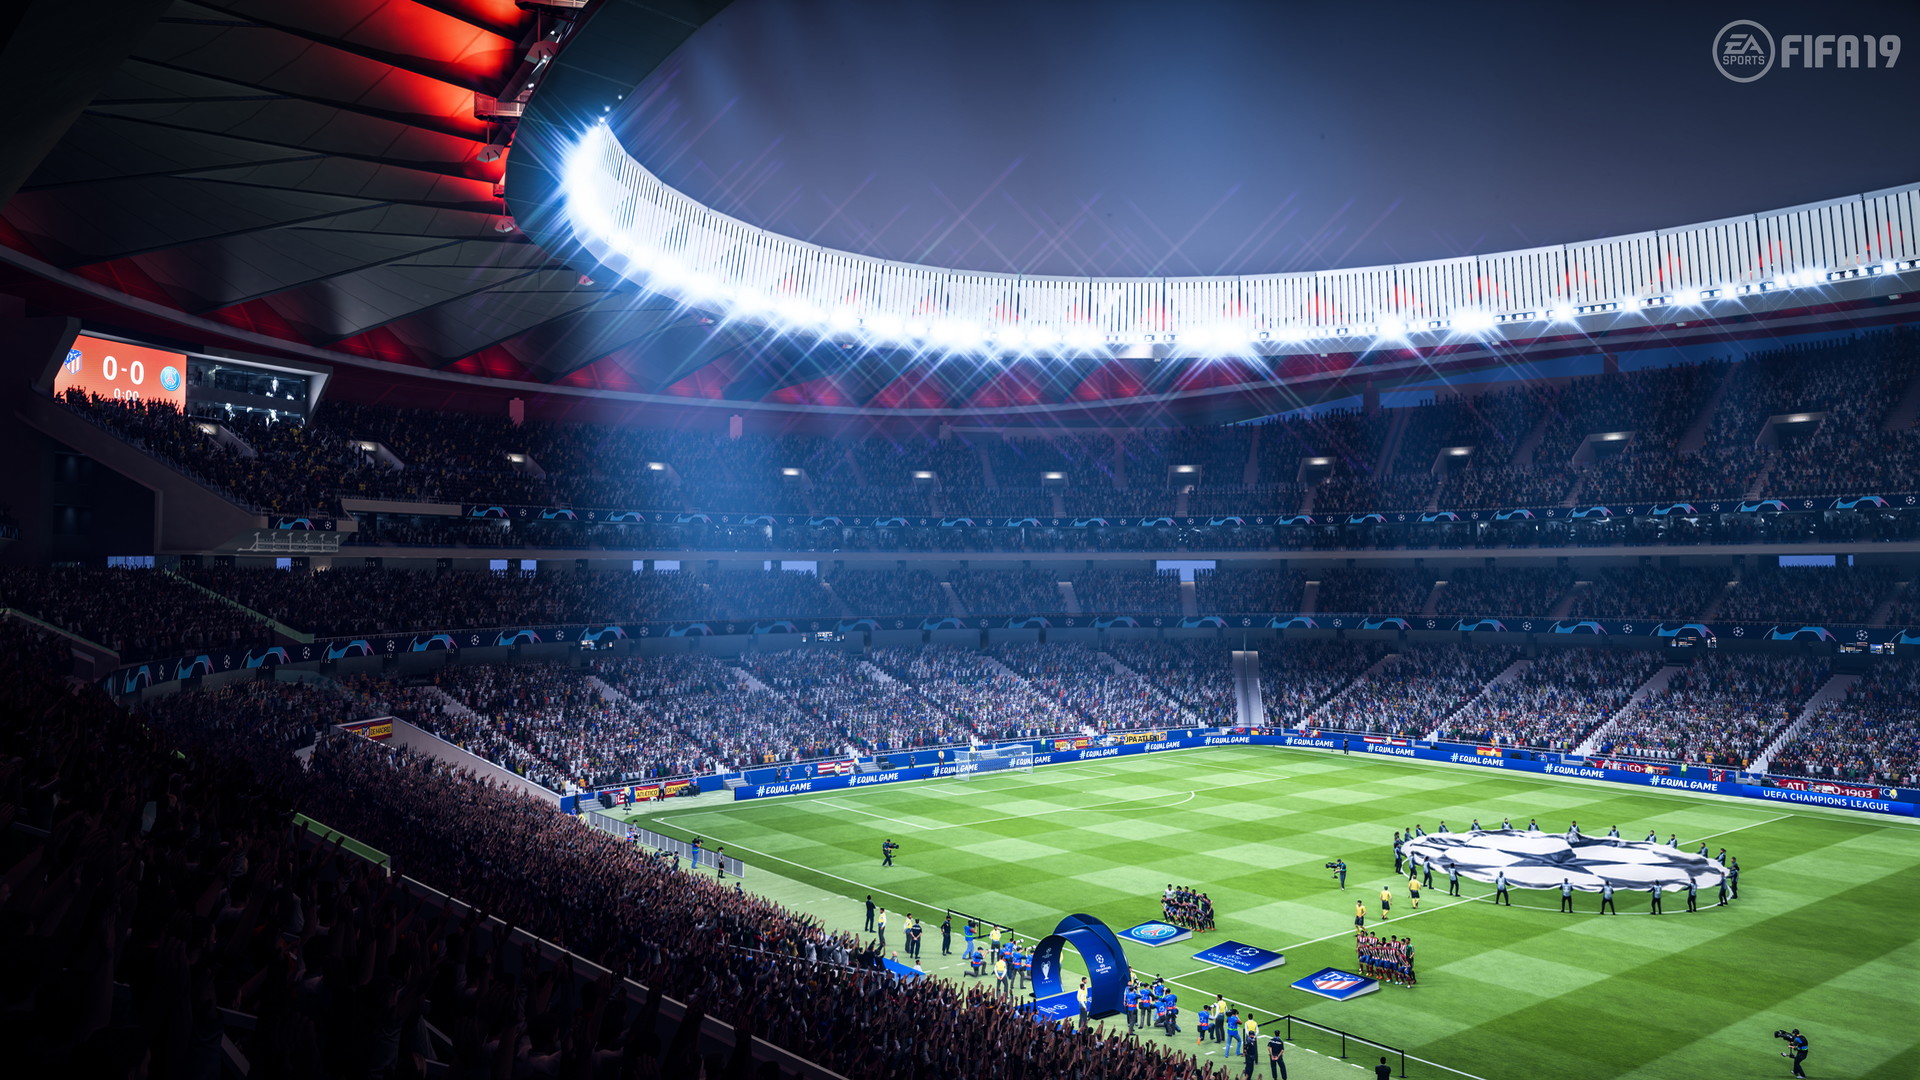 FIFA 19 - screenshot 10